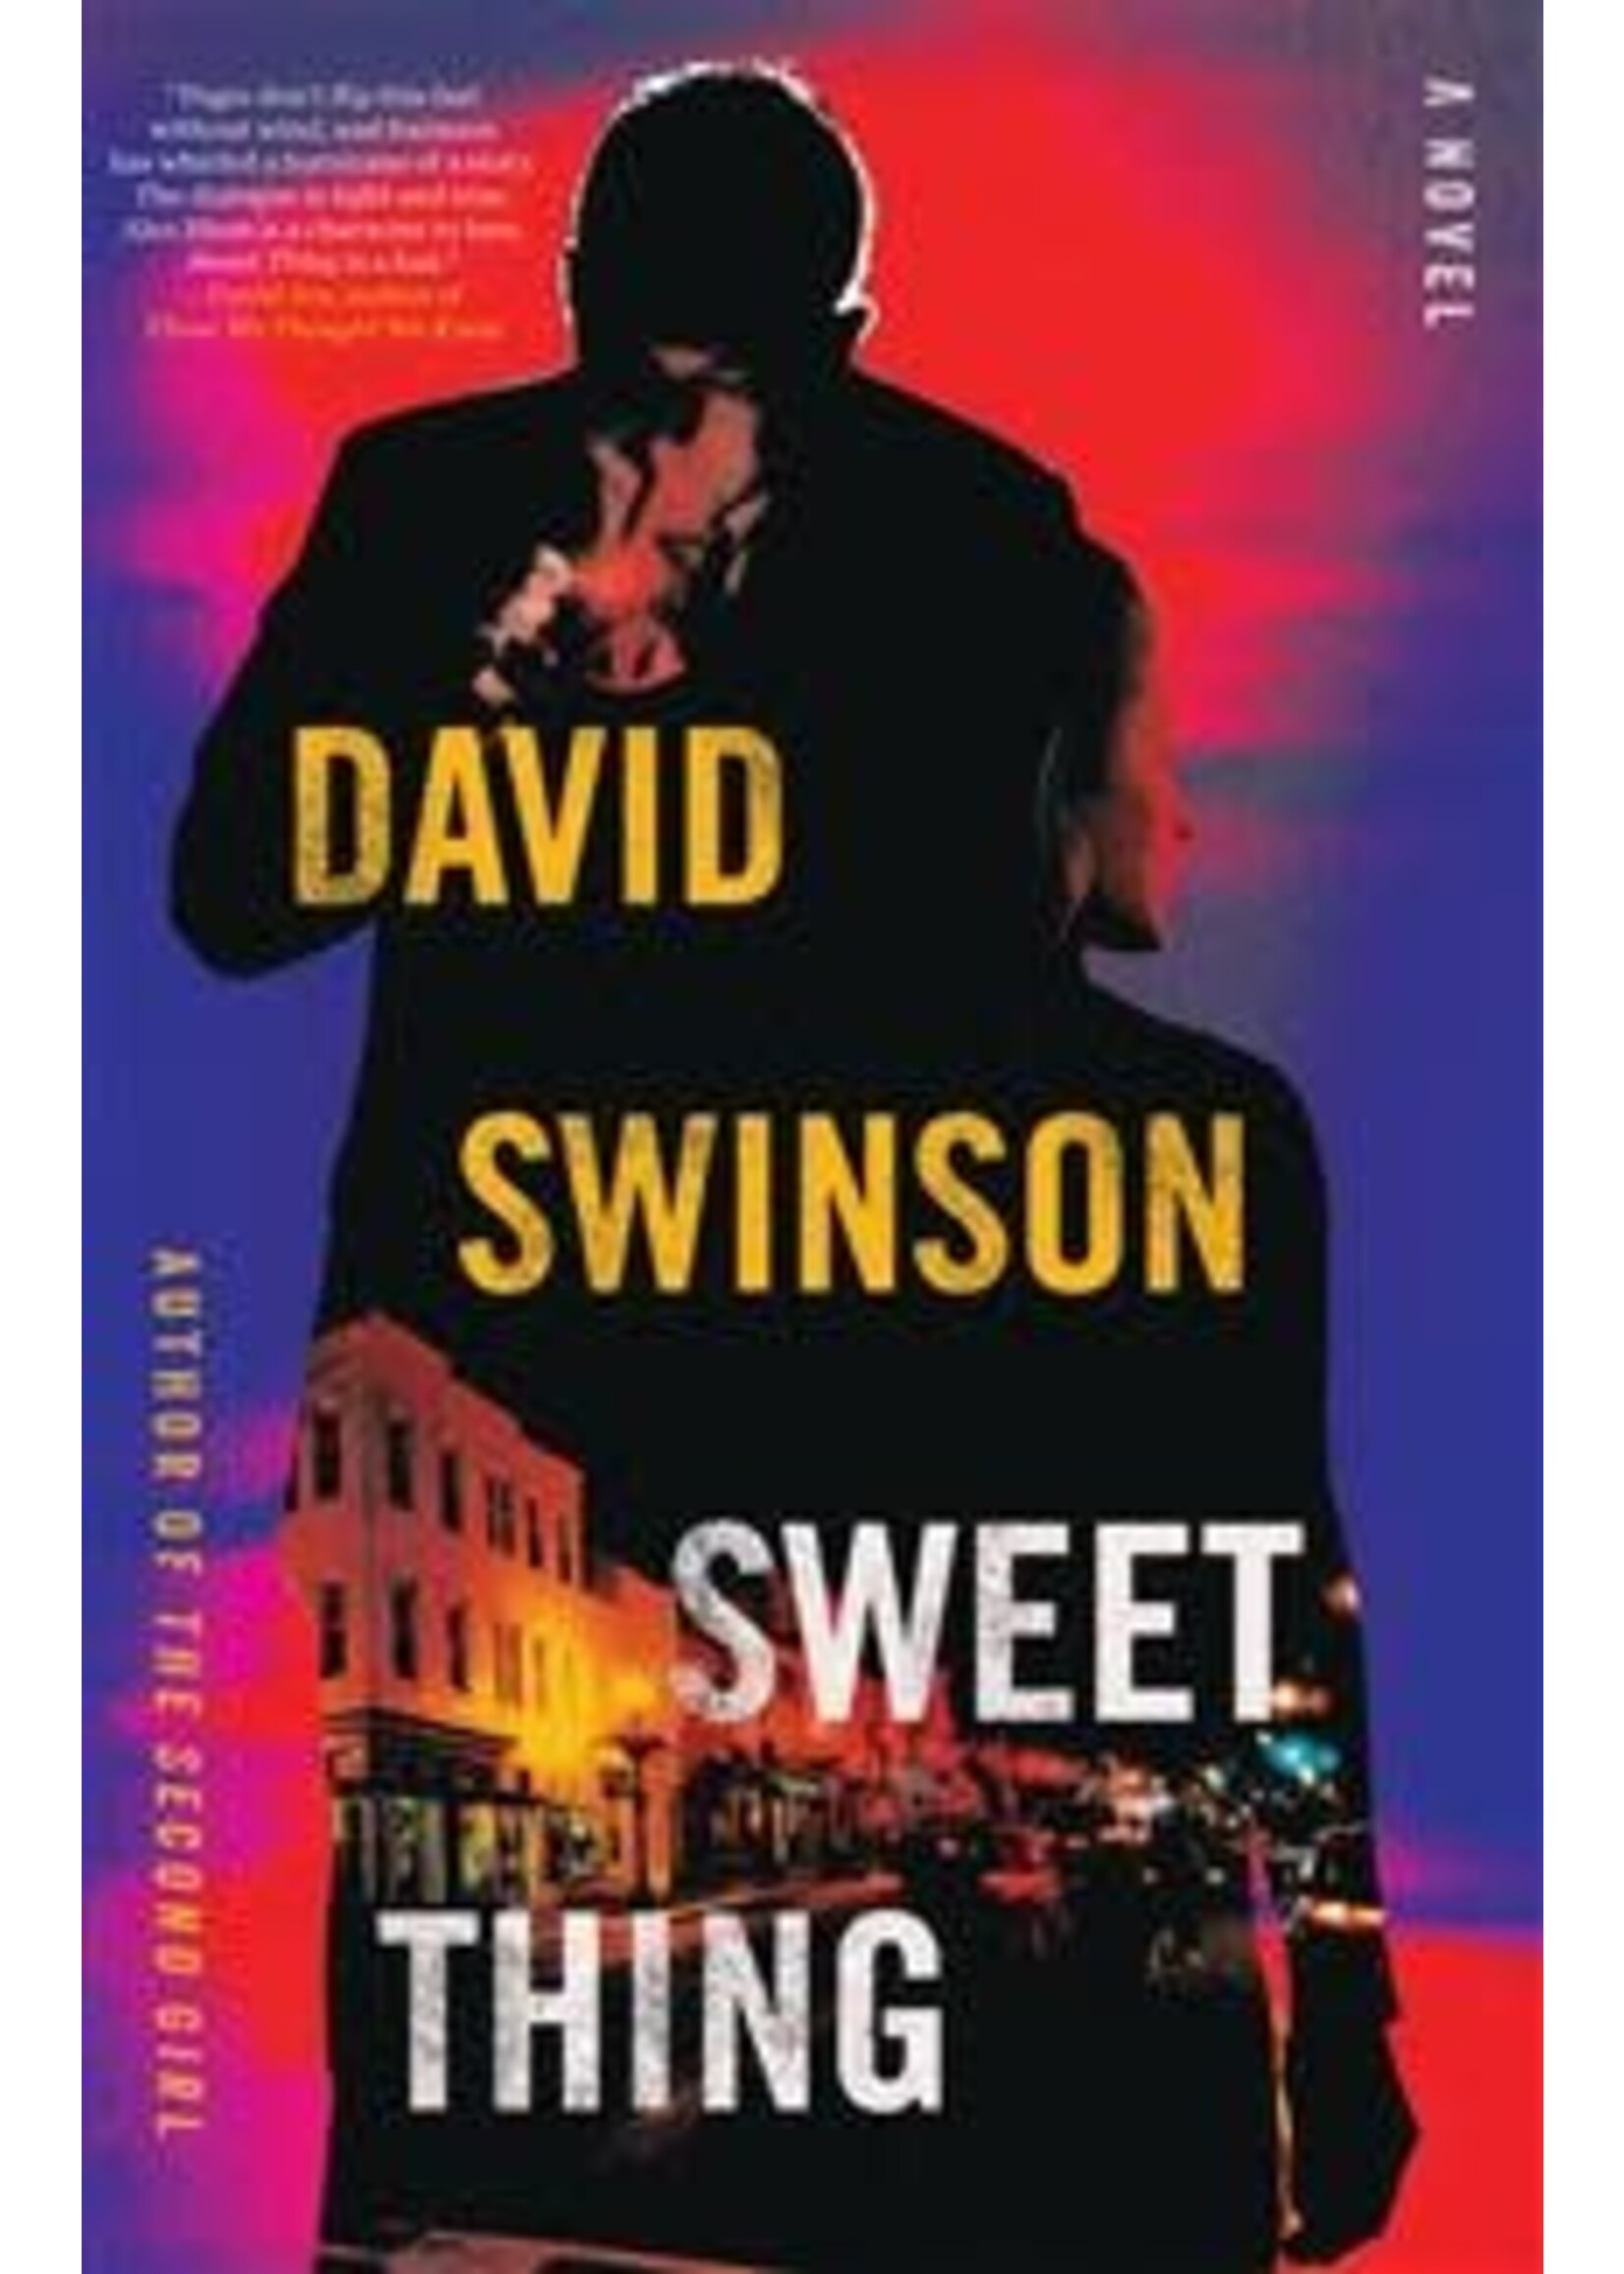 Sweet Thing by David Swinson